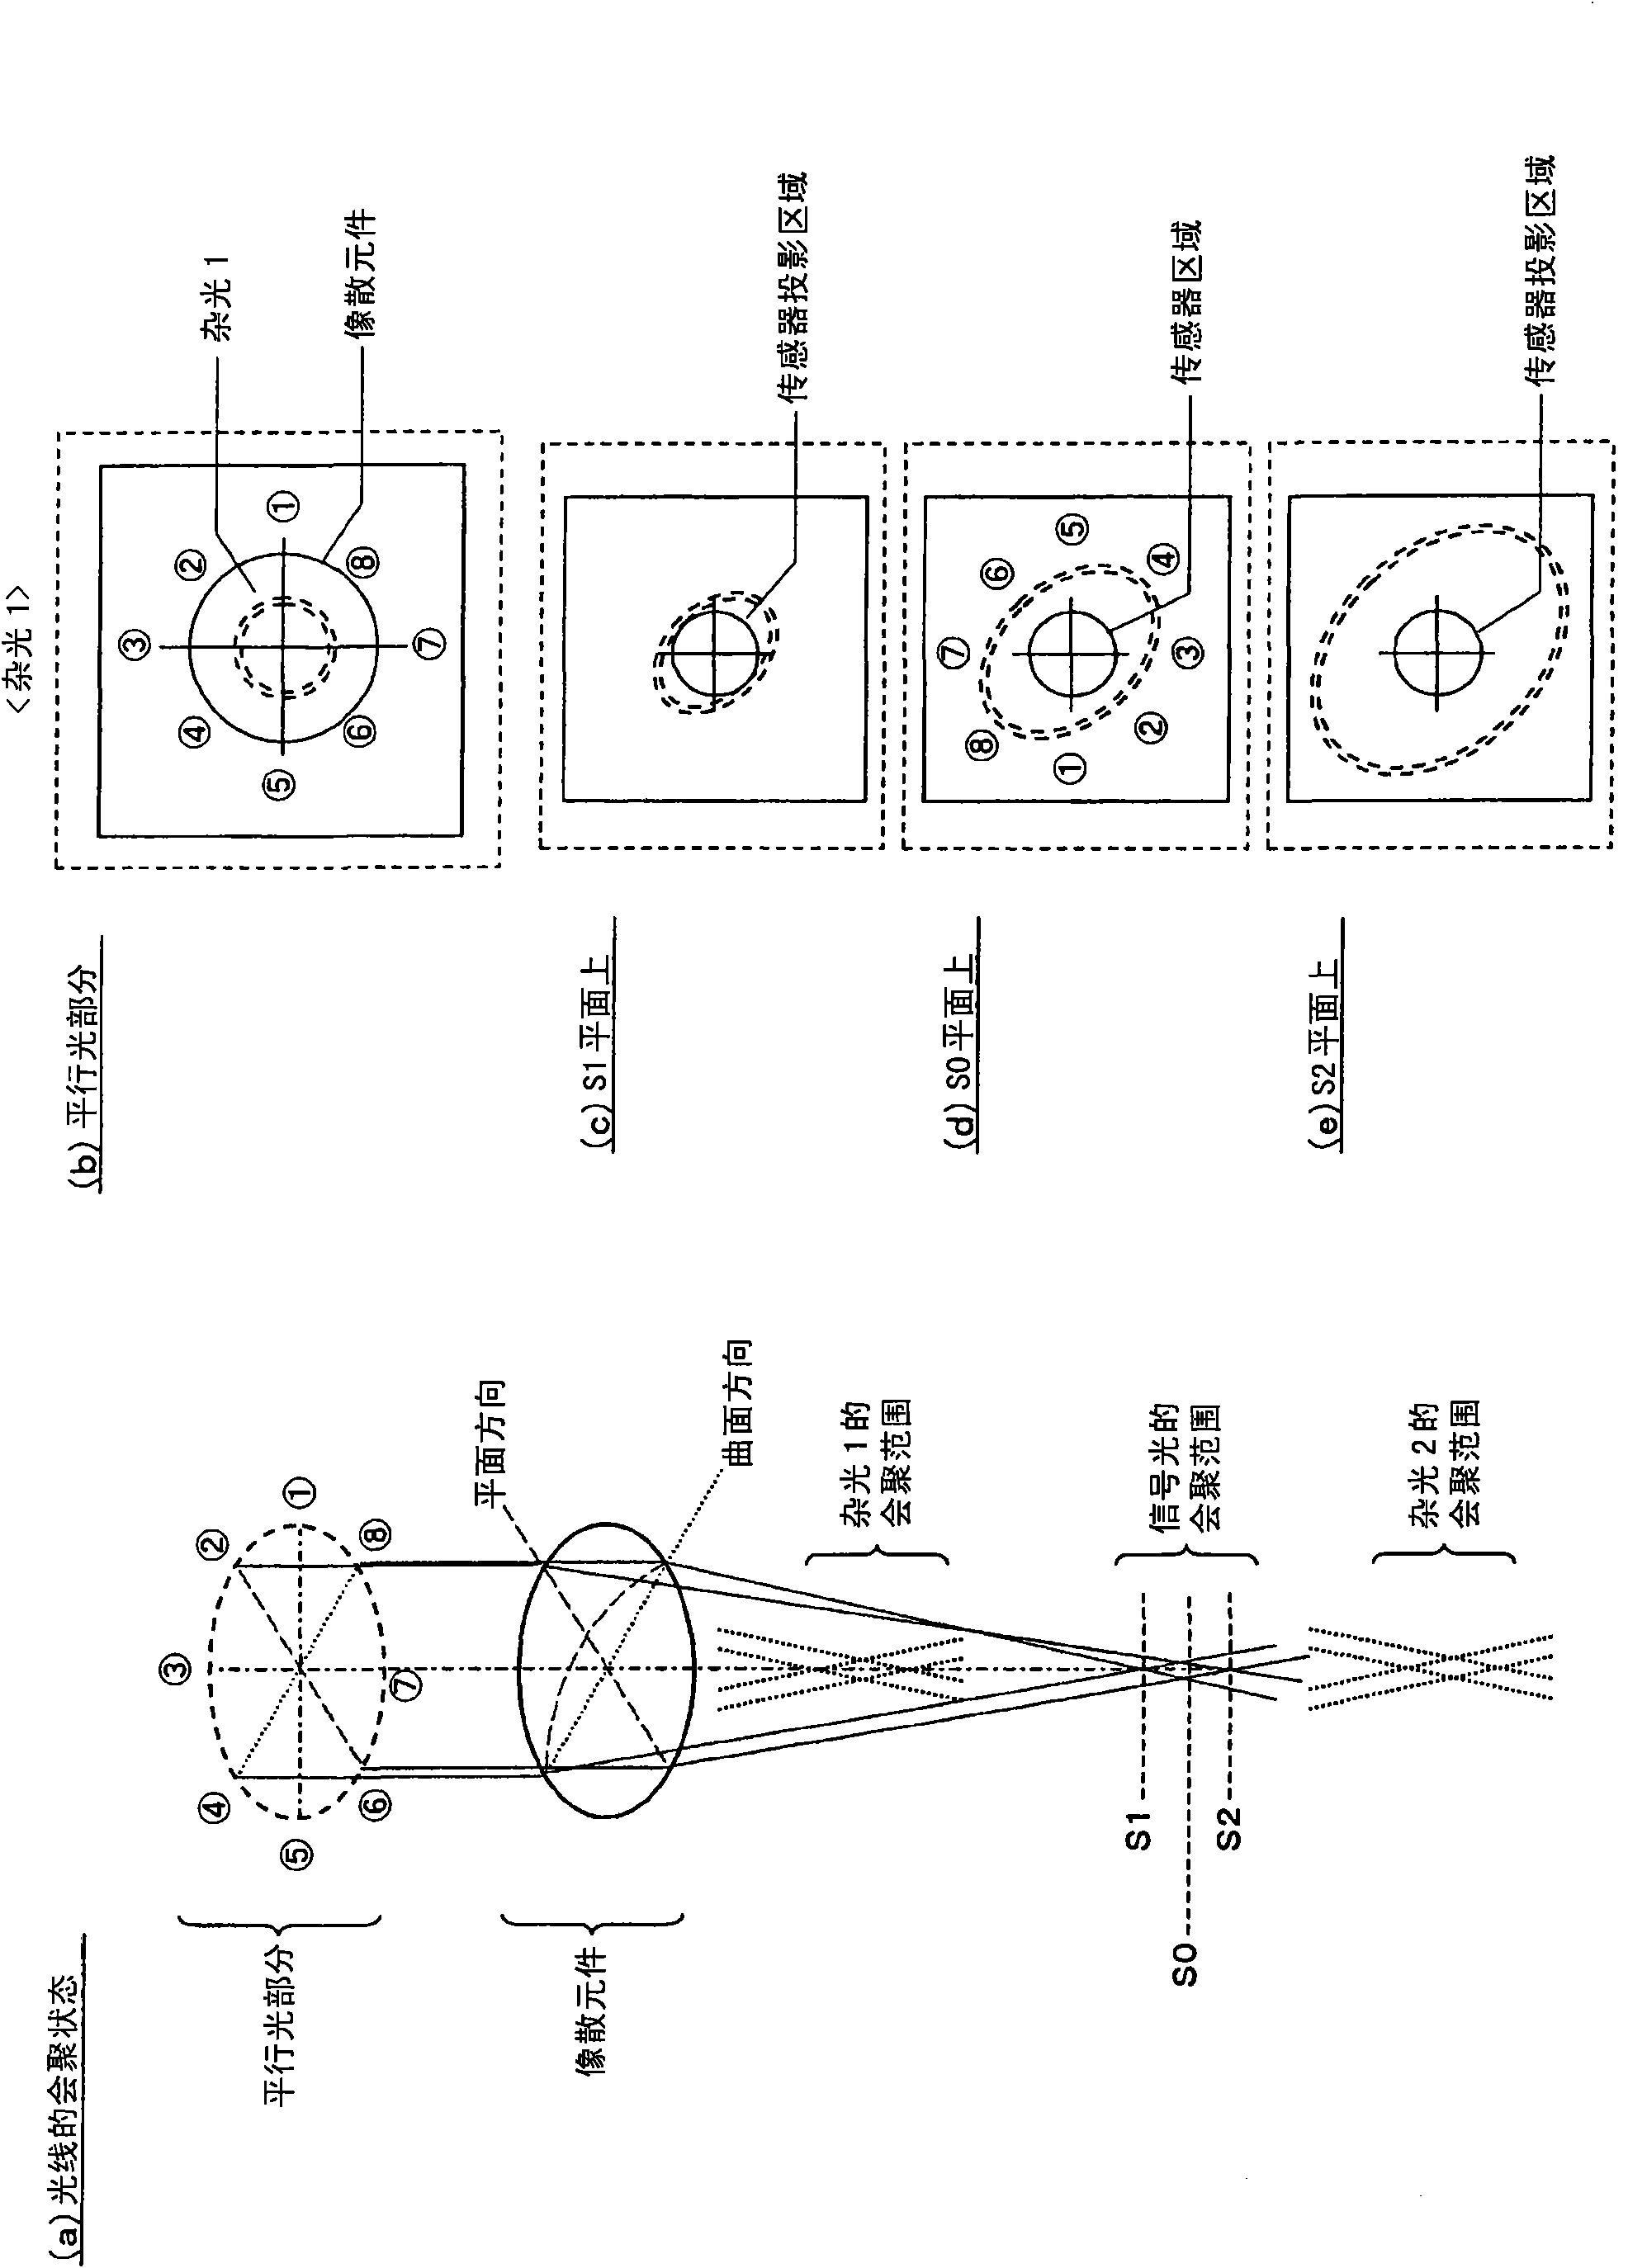 Optical pickup device